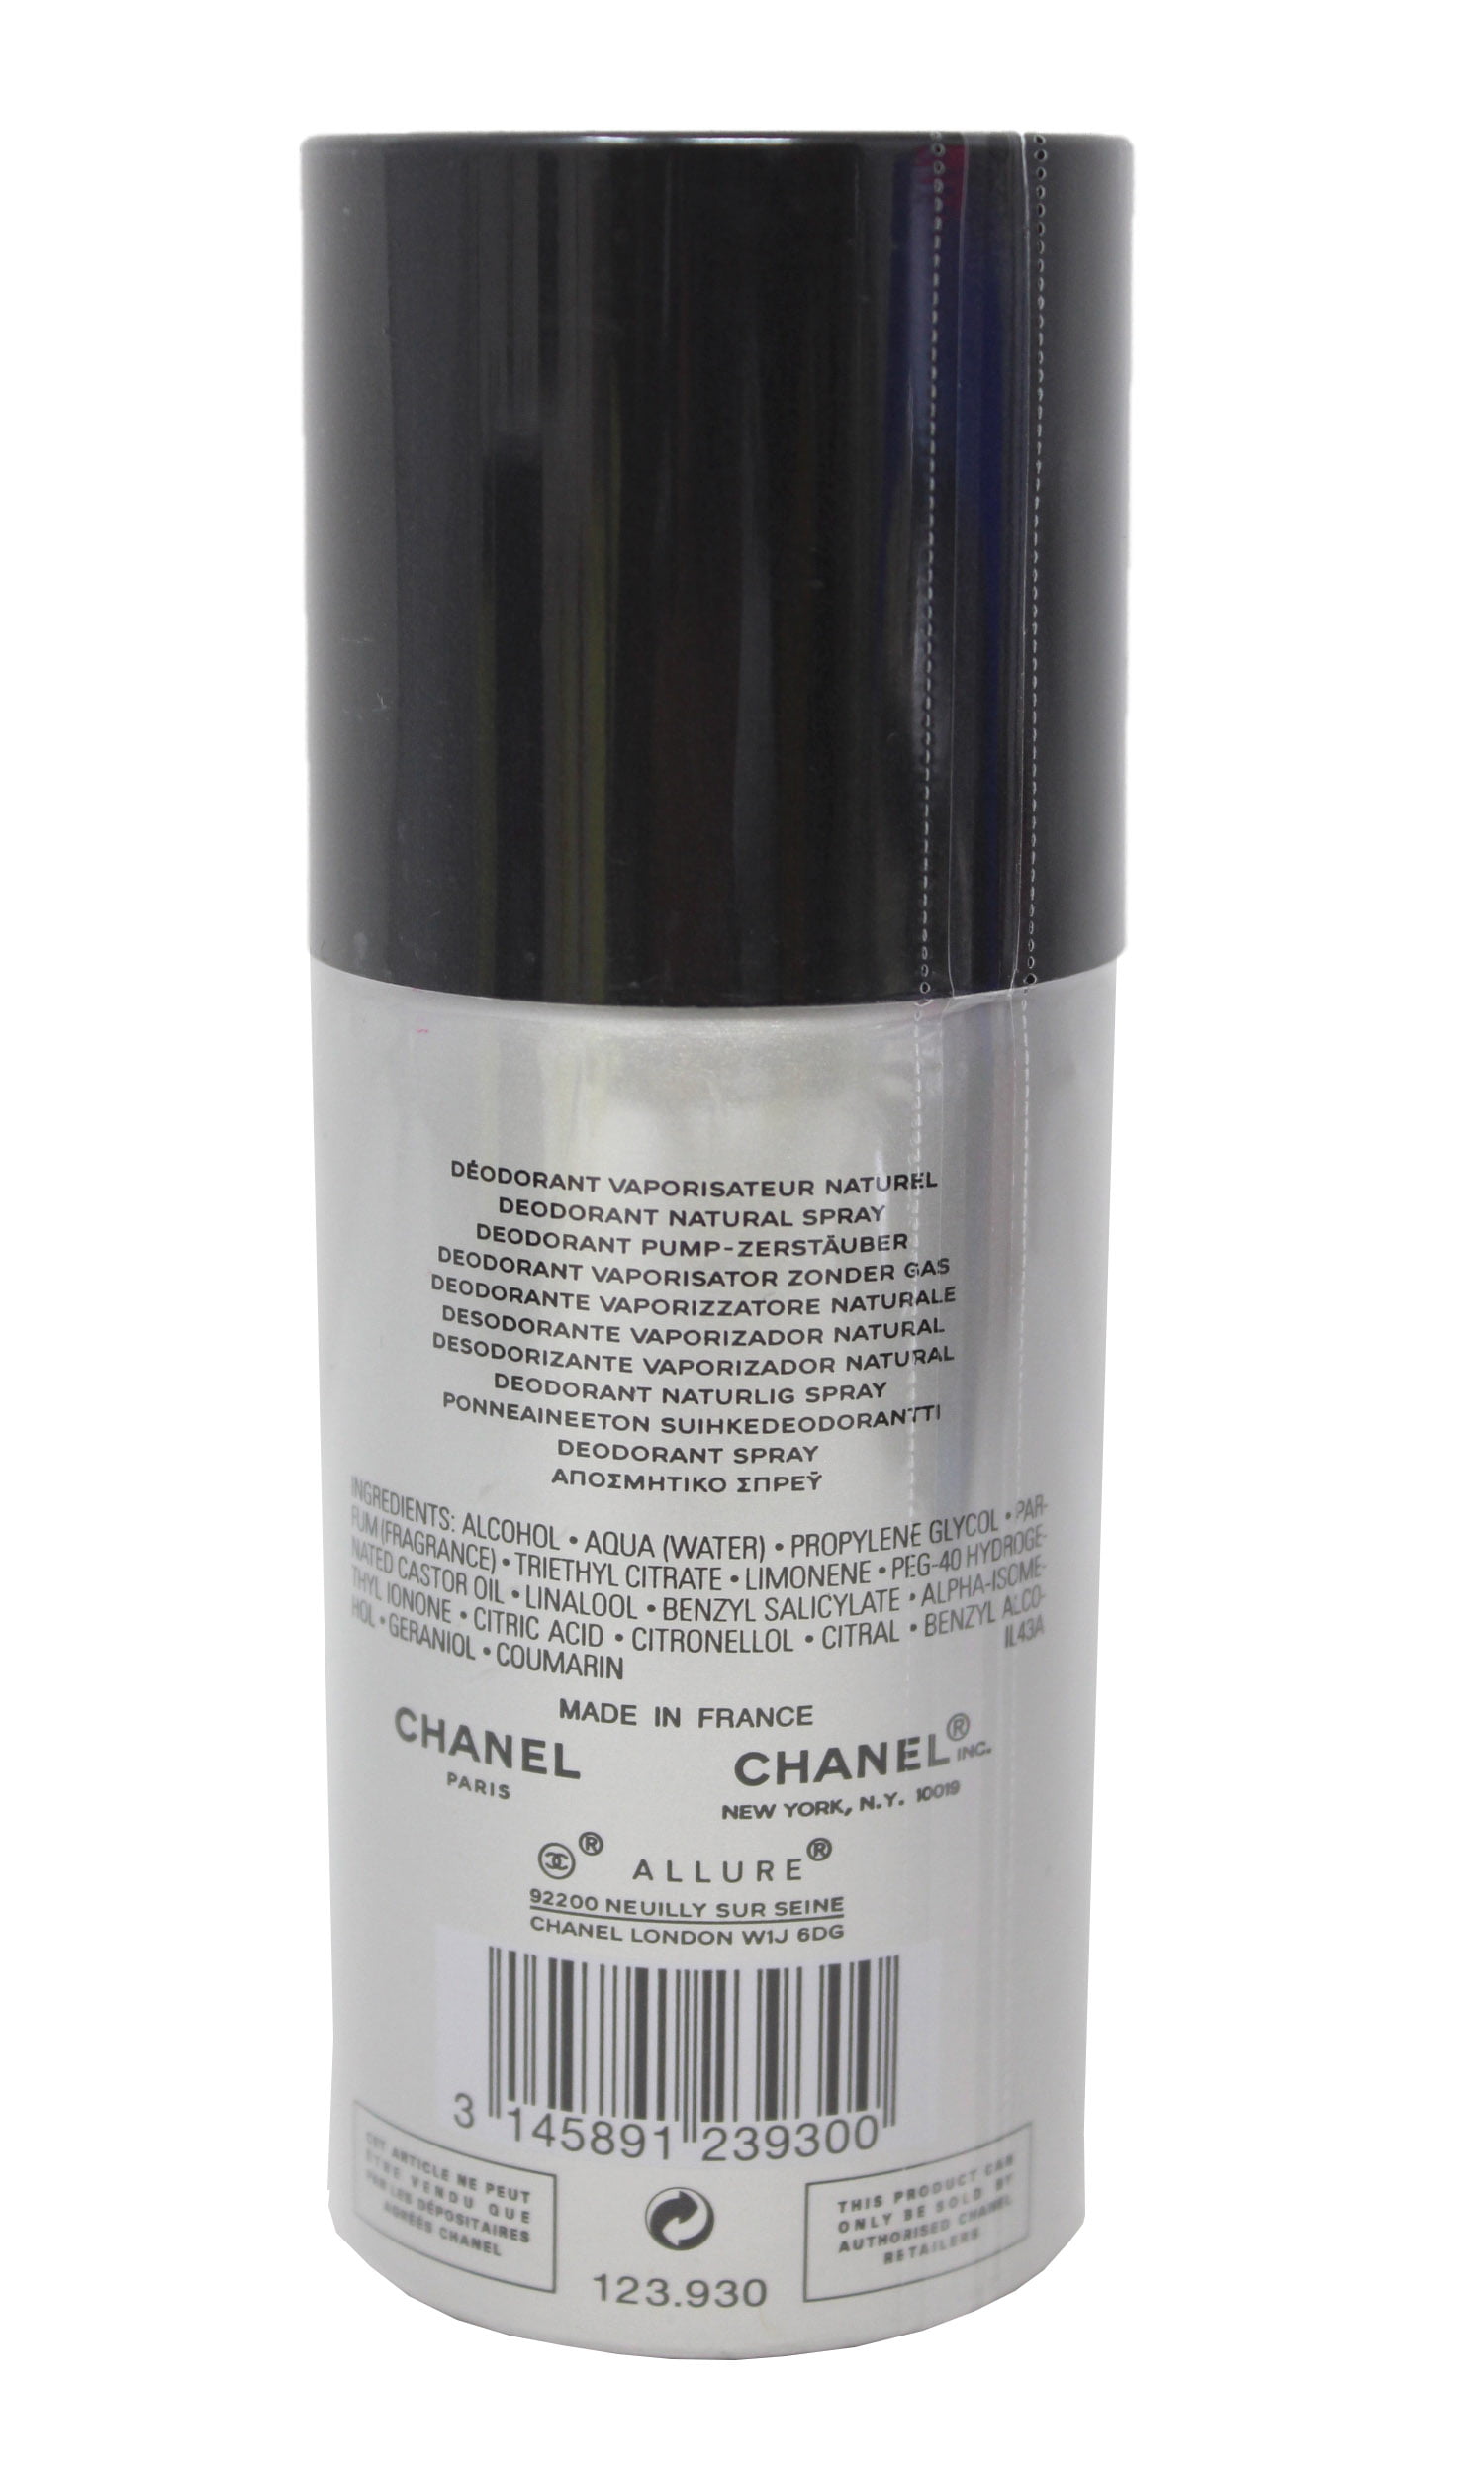 Chanel Allure Homme Sport Deodorant Spray 3.4 oz 